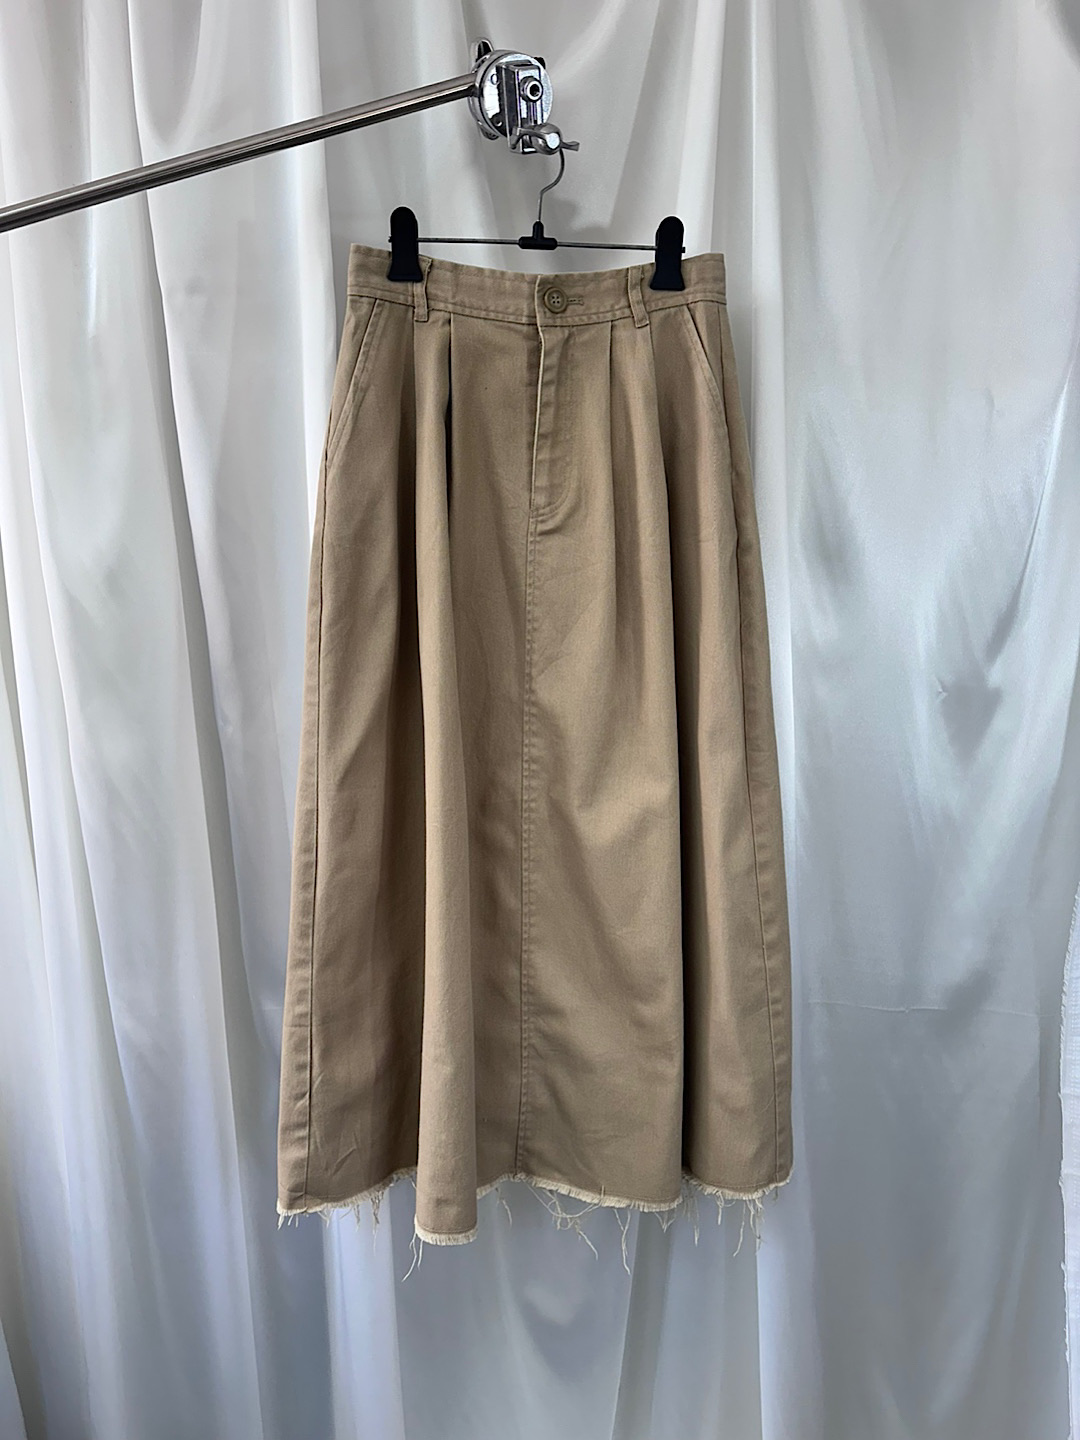 AMERICAN HOLLIC skirt (m)